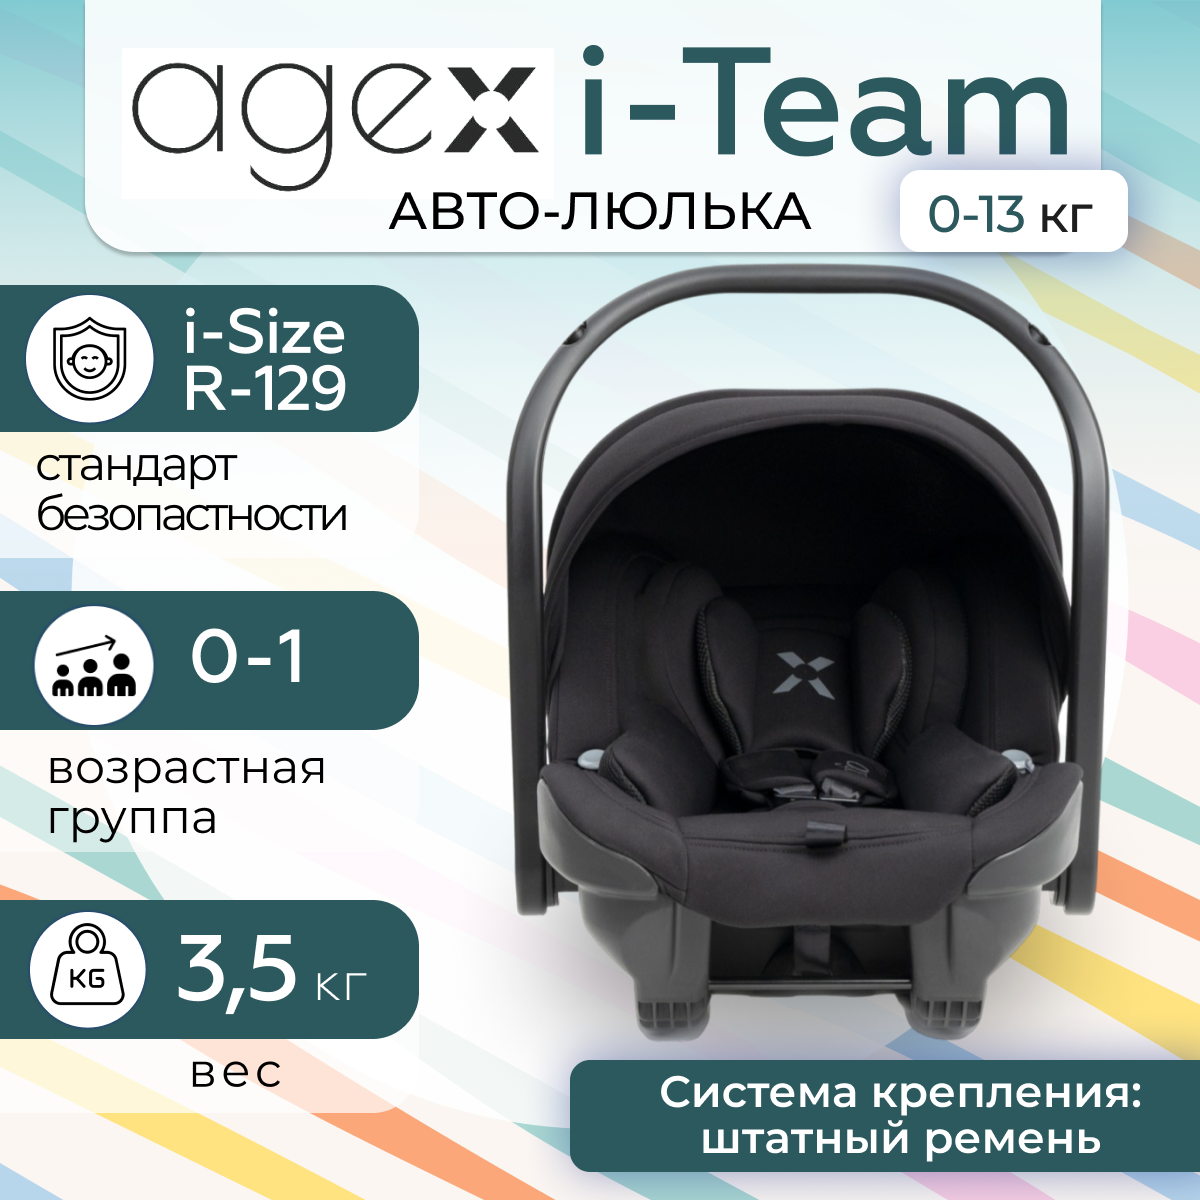 Автокресло Agex i-Team серый, 0-13 кг автокресло agex i team 0 13 кг